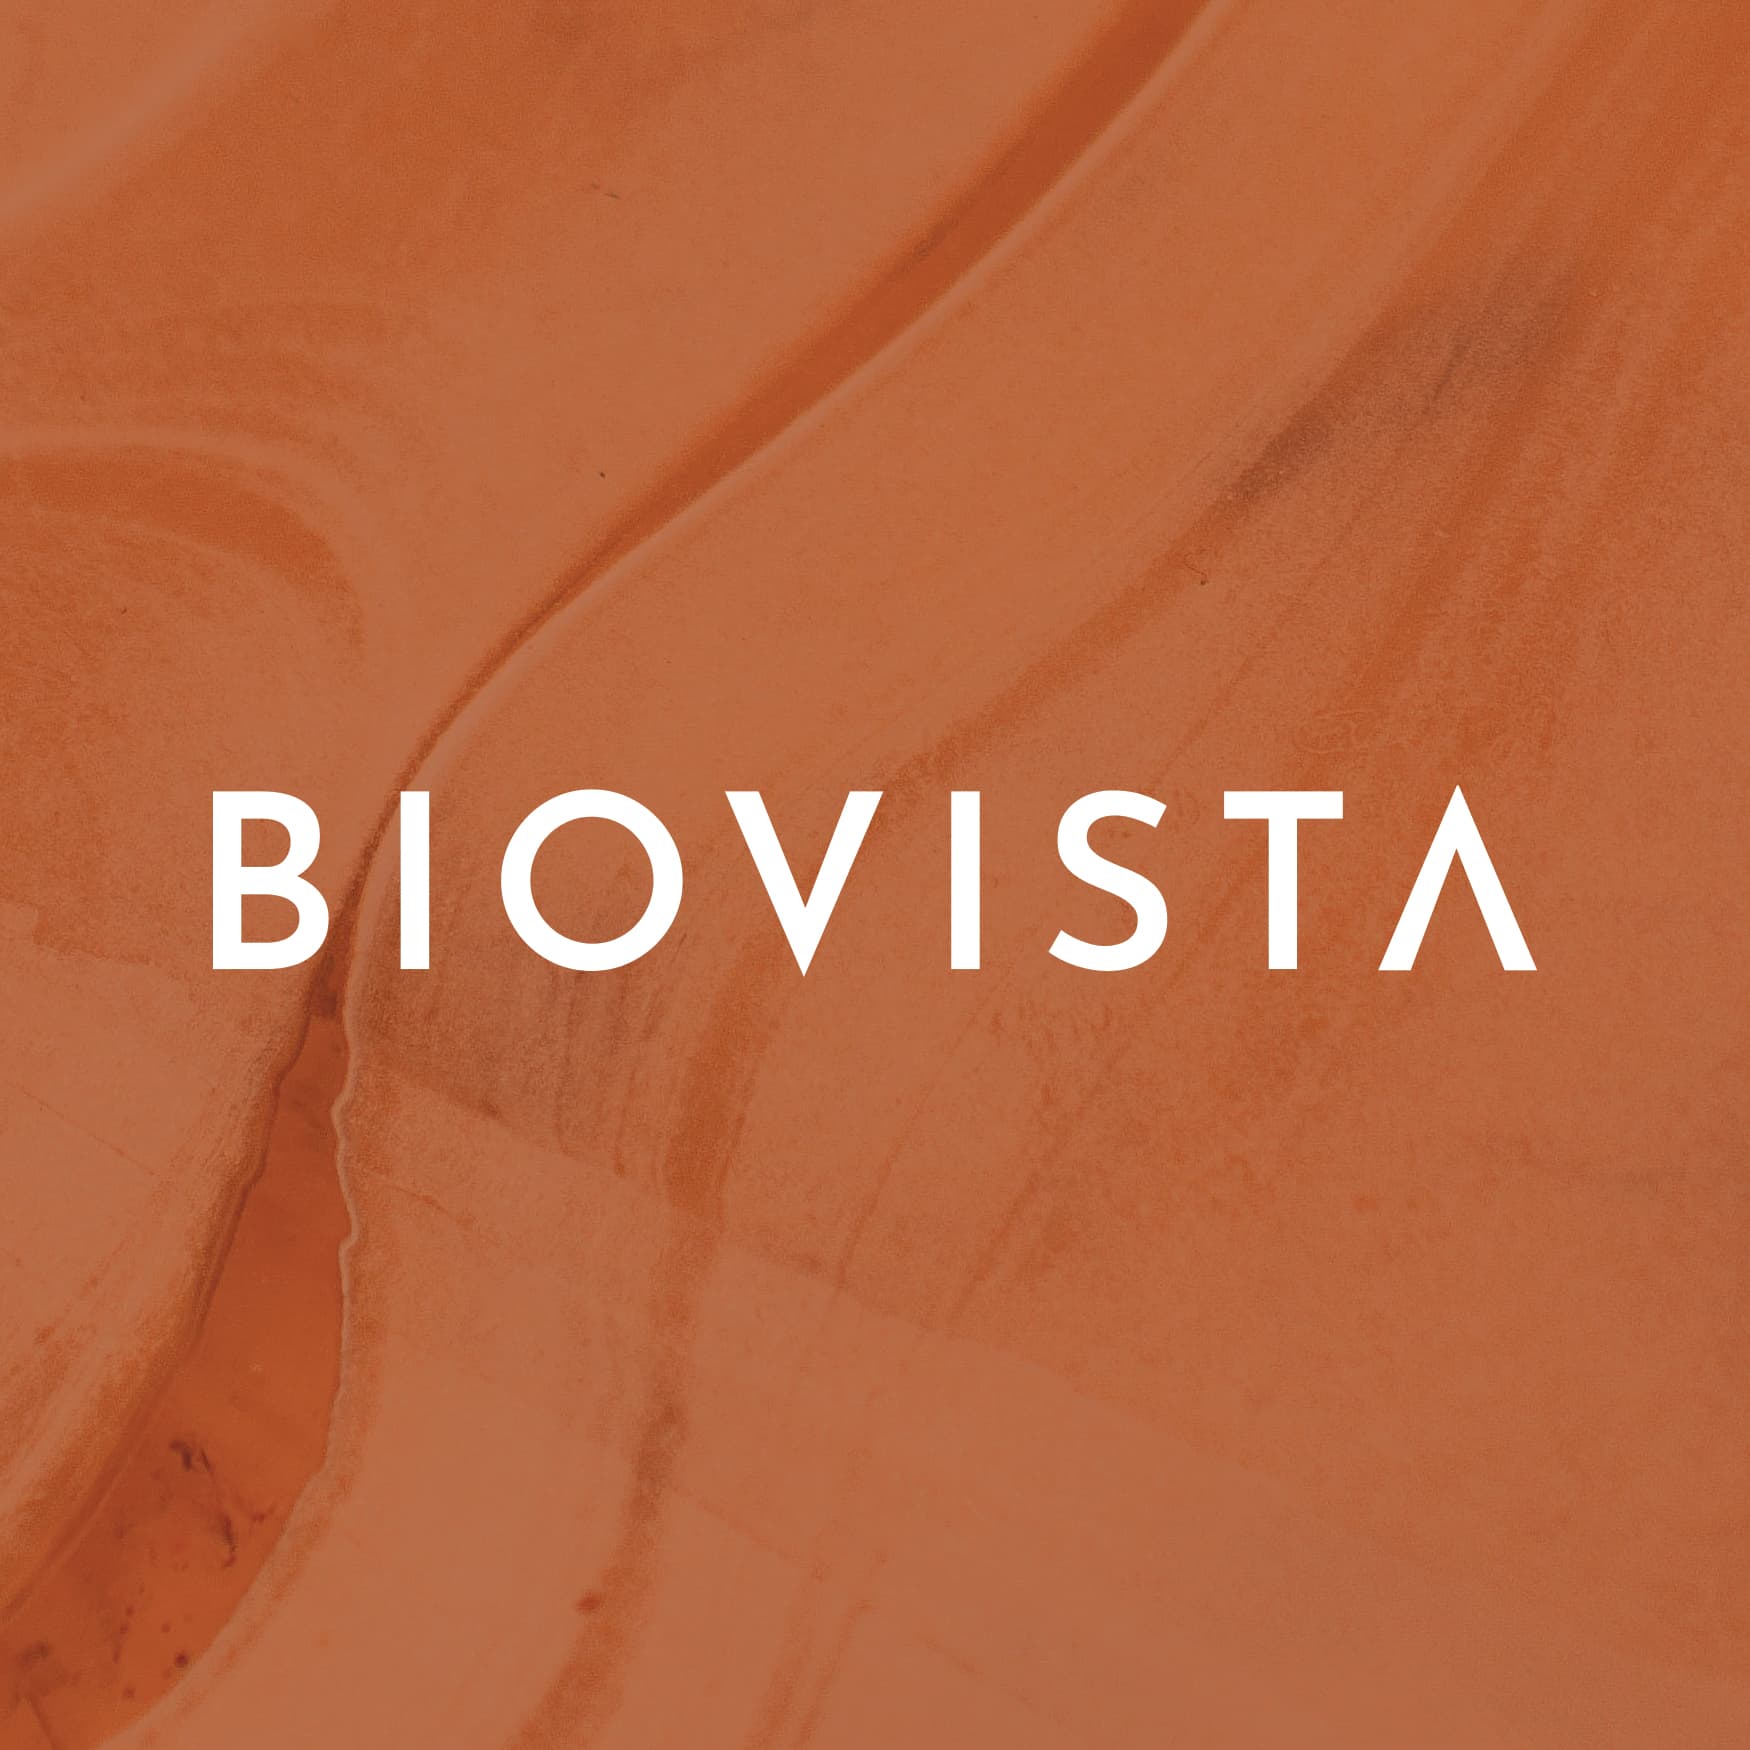 Clean and simple BioVista primary wordmark logo in white. Branding by RSM Design 